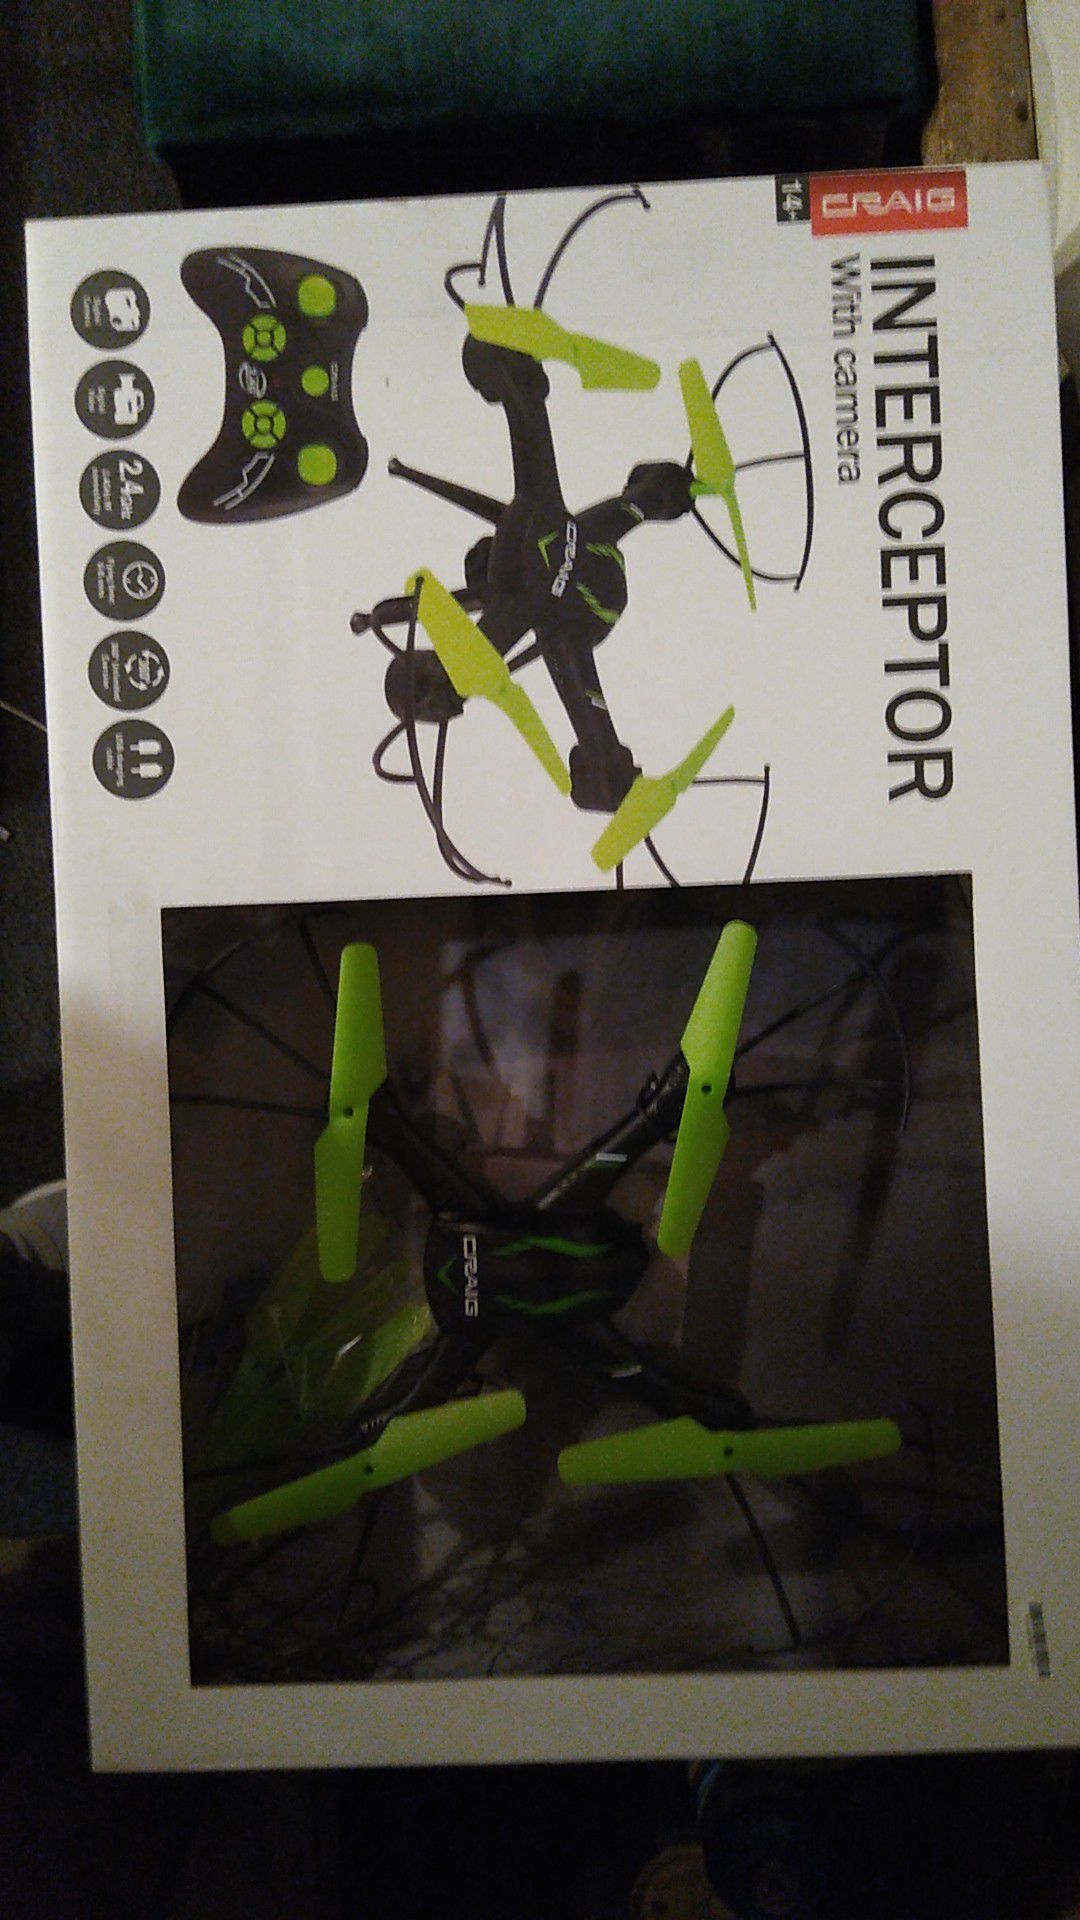 Drone interceptor with camera